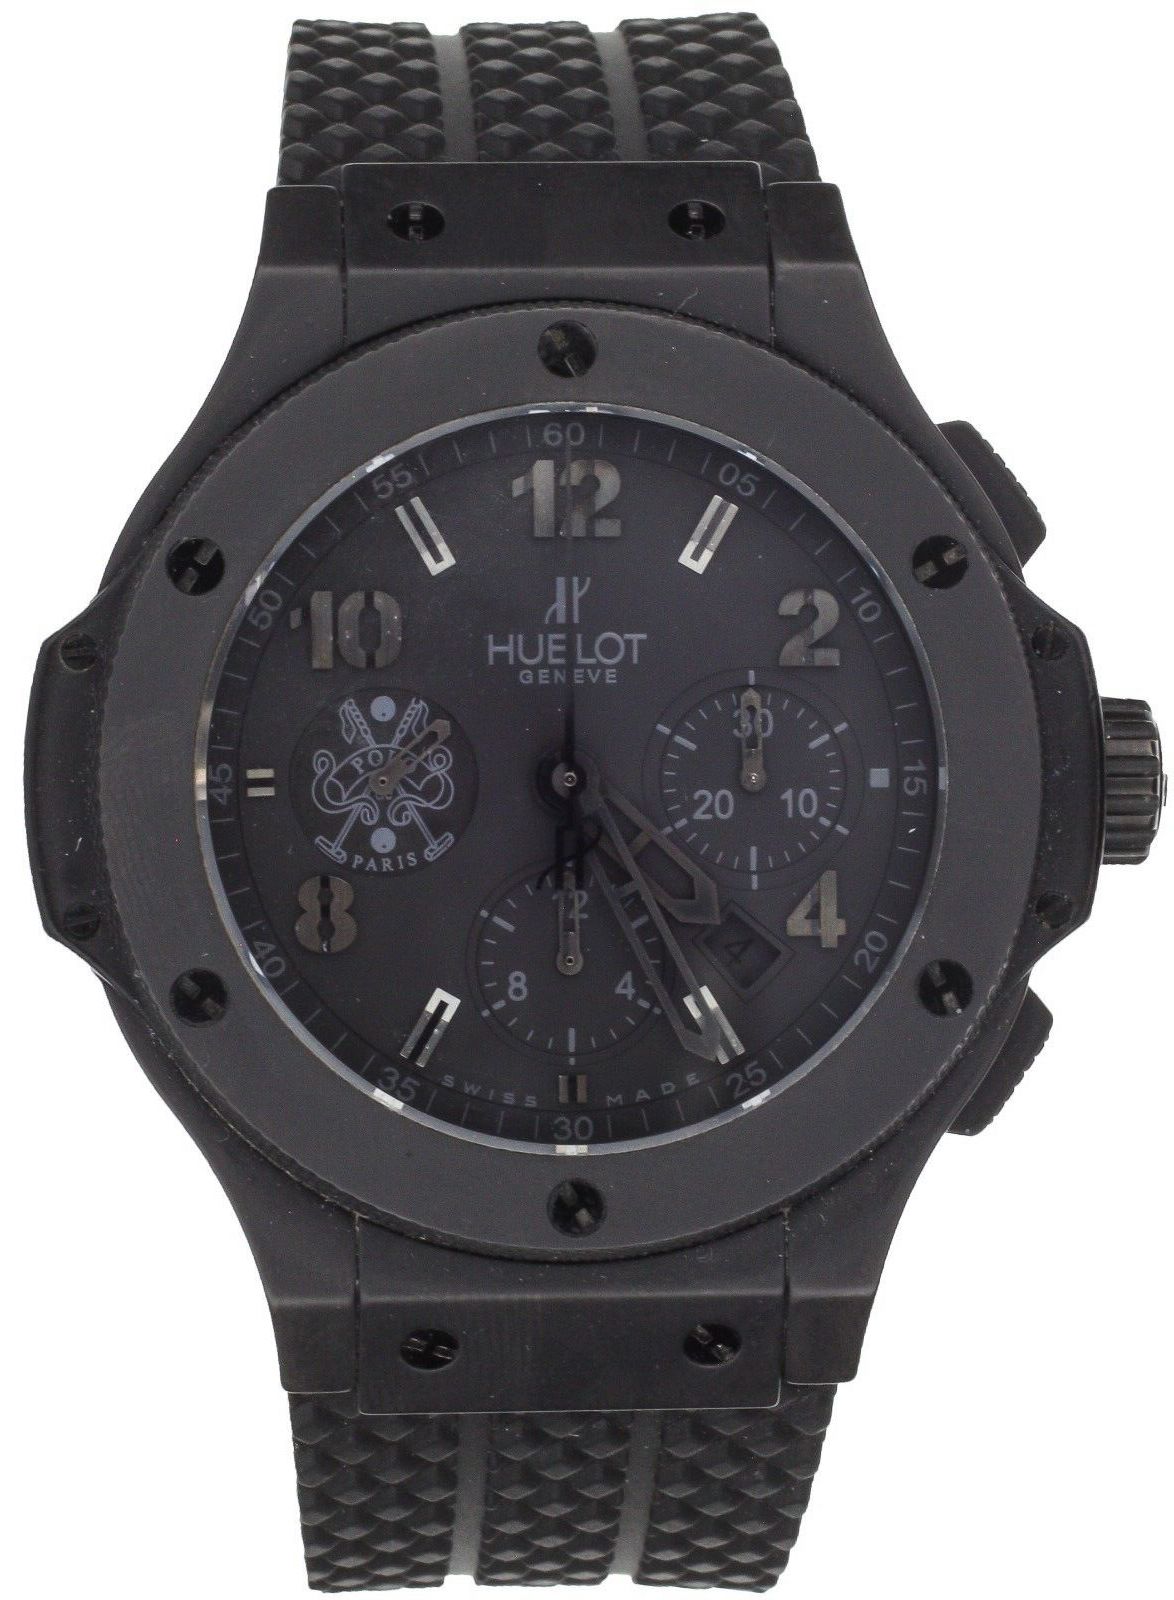 Hublot Big Bang Polo De Paris Ceramic Limited Edition Men's Watch